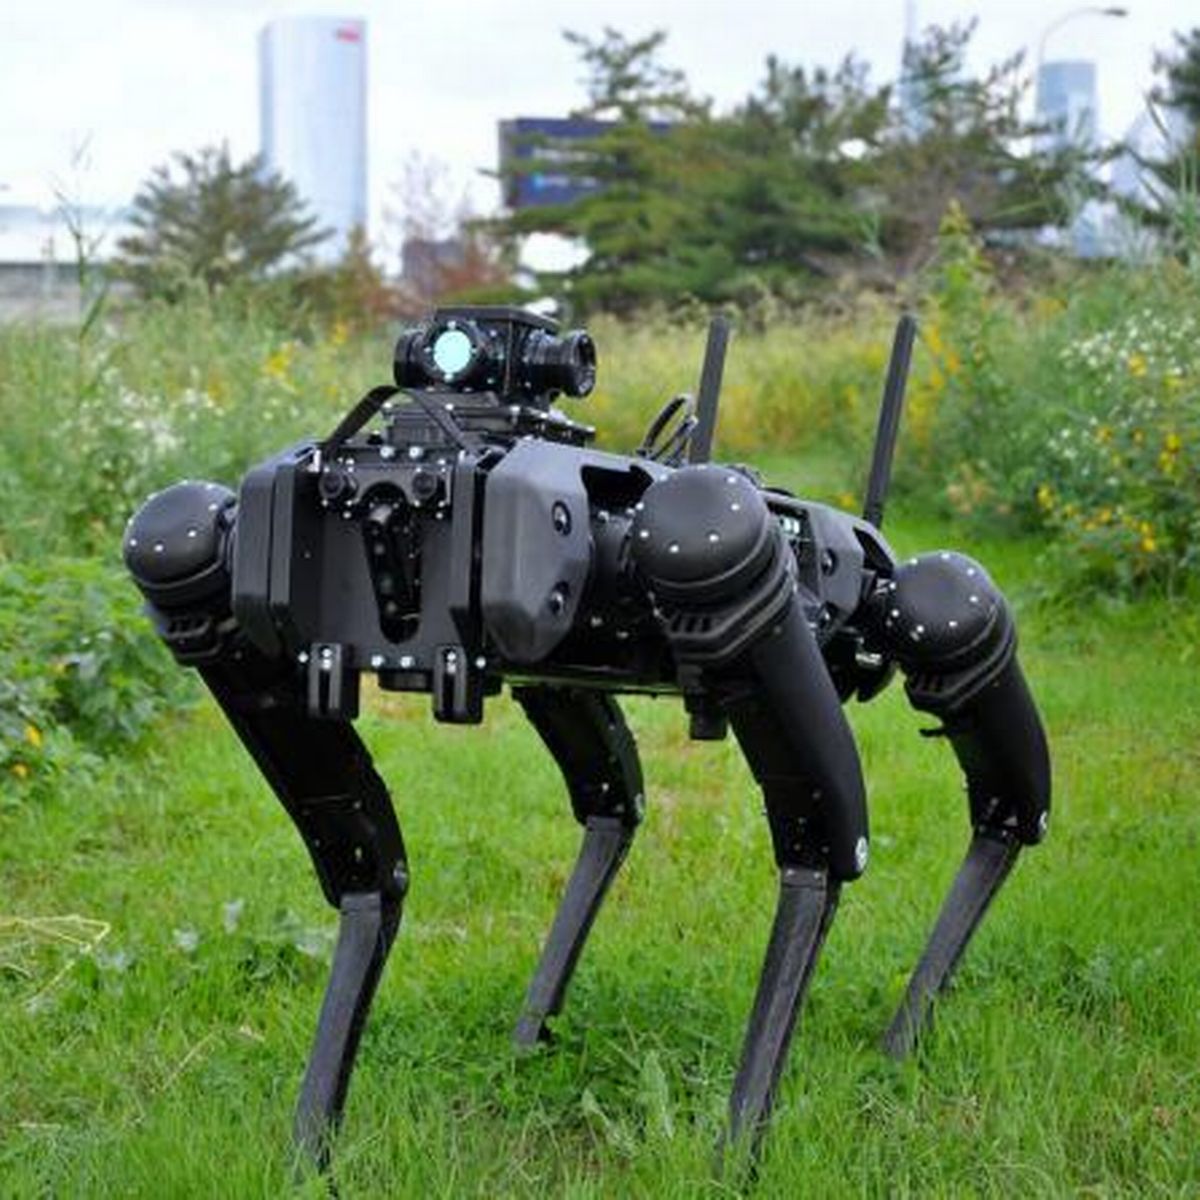 a robotic dog sculpture made of metal parts.